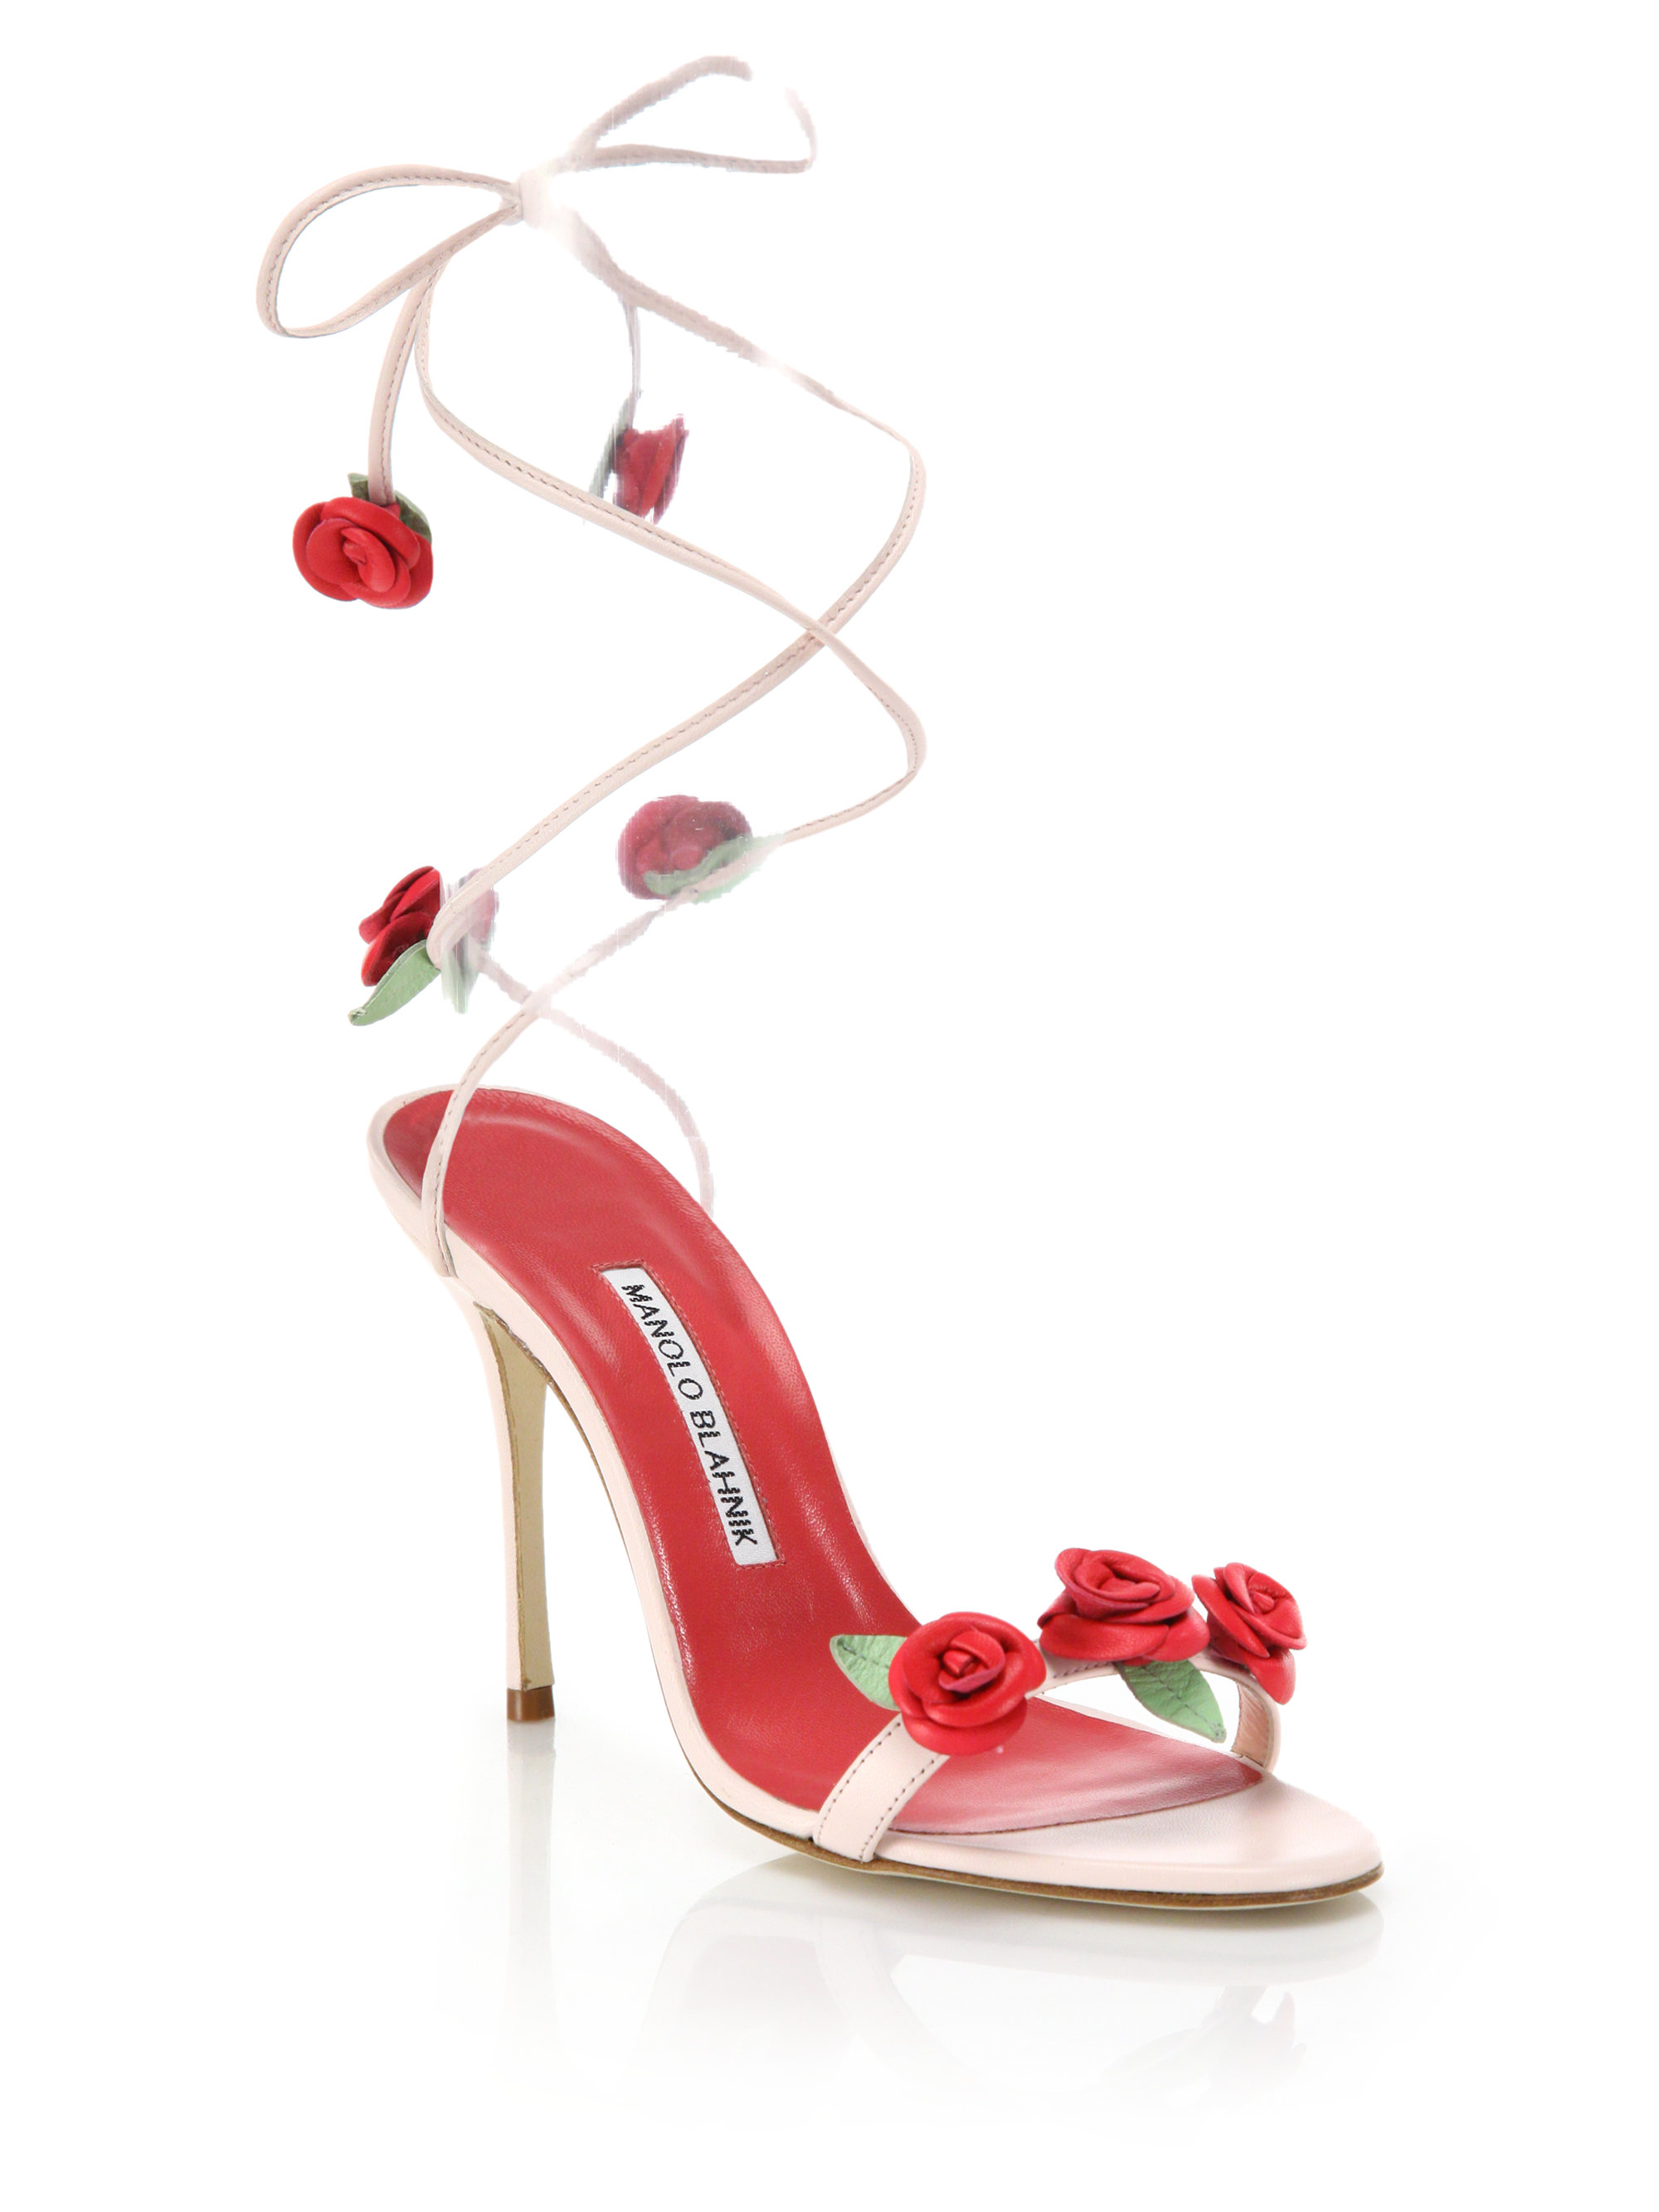 Lyst - Manolo Blahnik Leather Rose-detail Lace-up Sandals